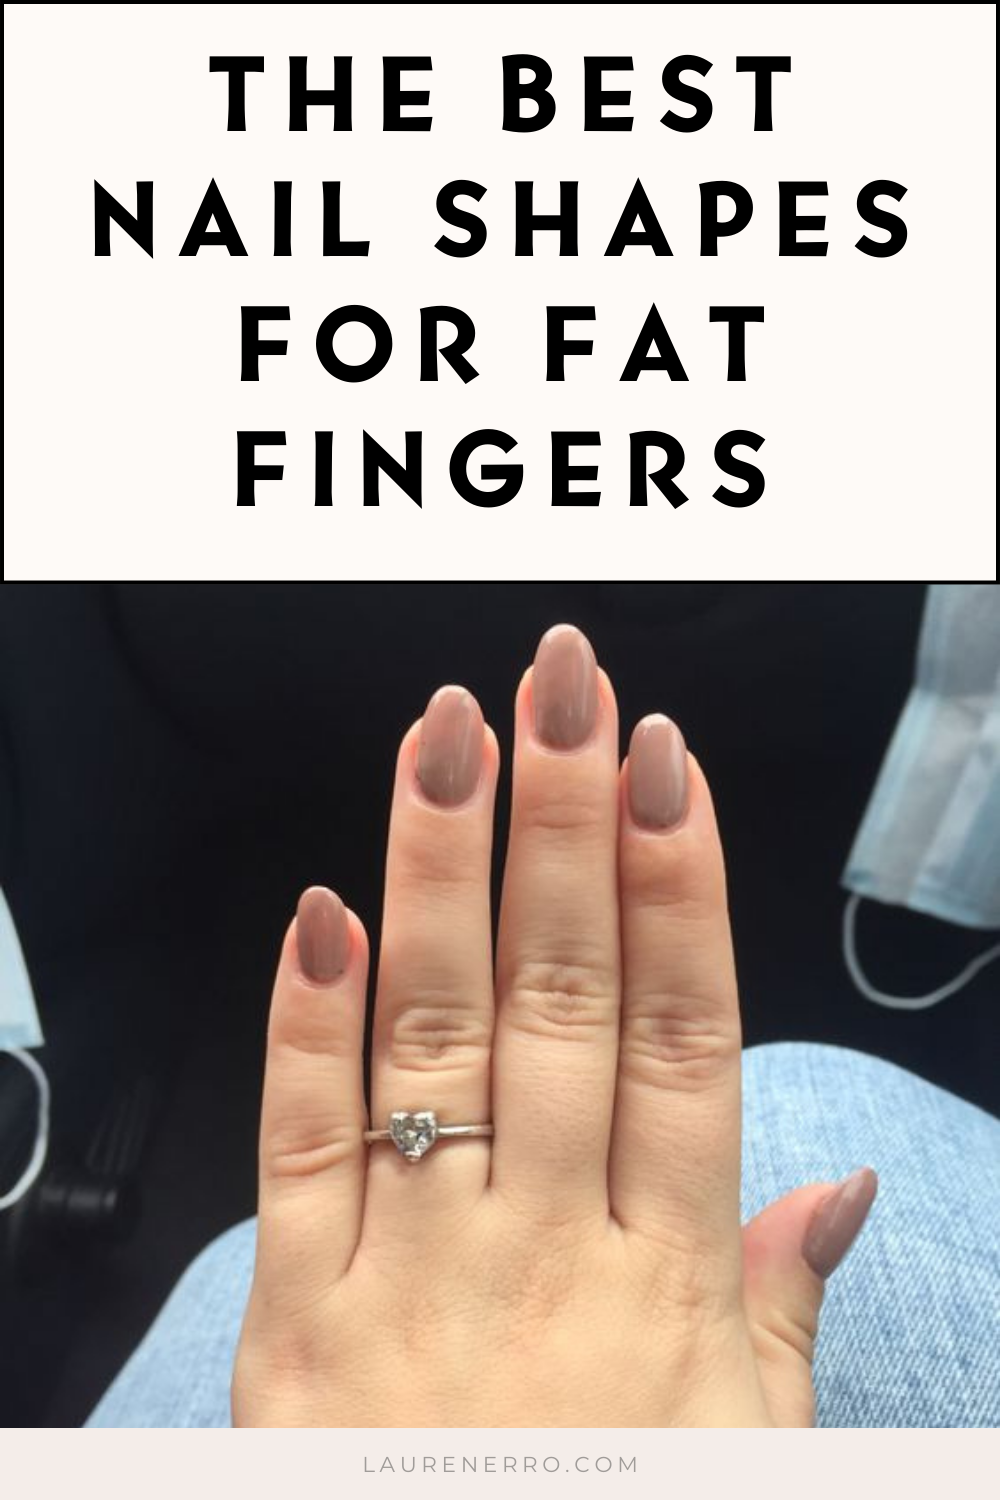 The 5 Best Nail Shapes For Fat Fingers - Lauren Erro